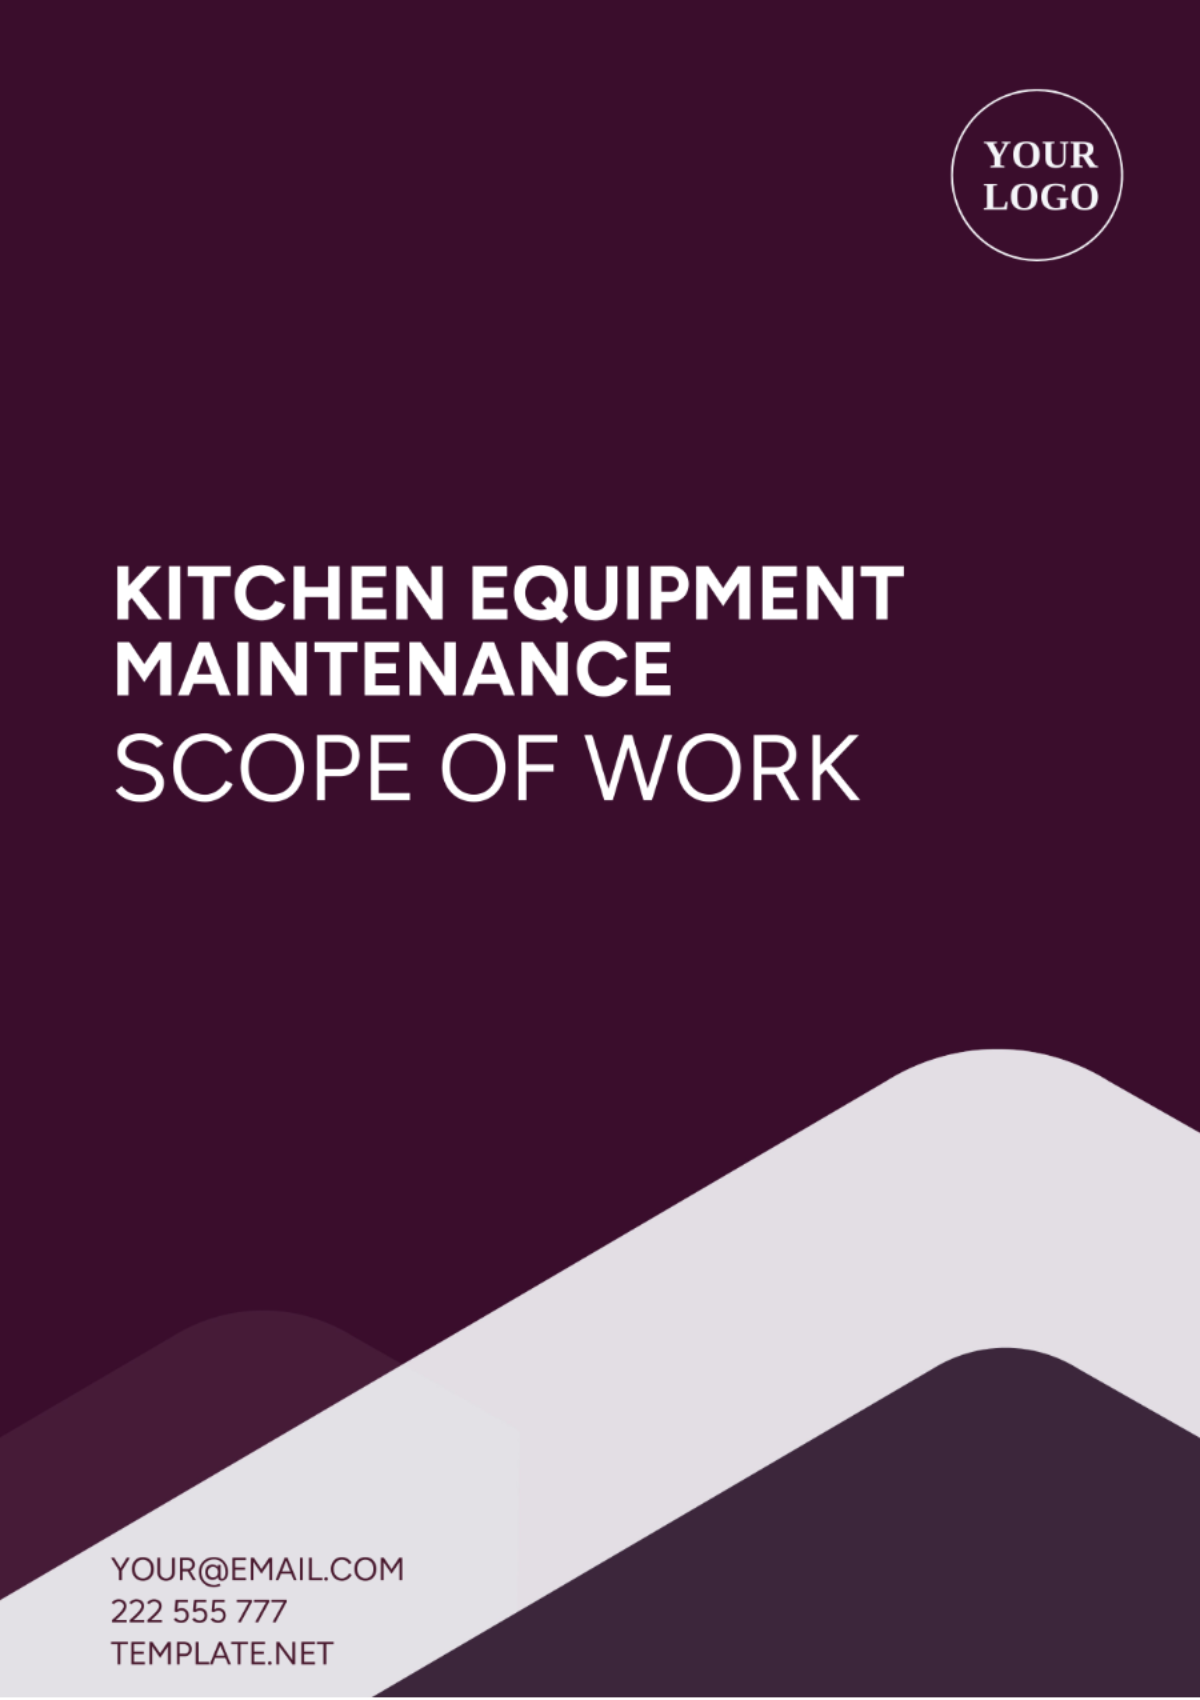 Kitchen Equipment Maintenance Scope of Work Template